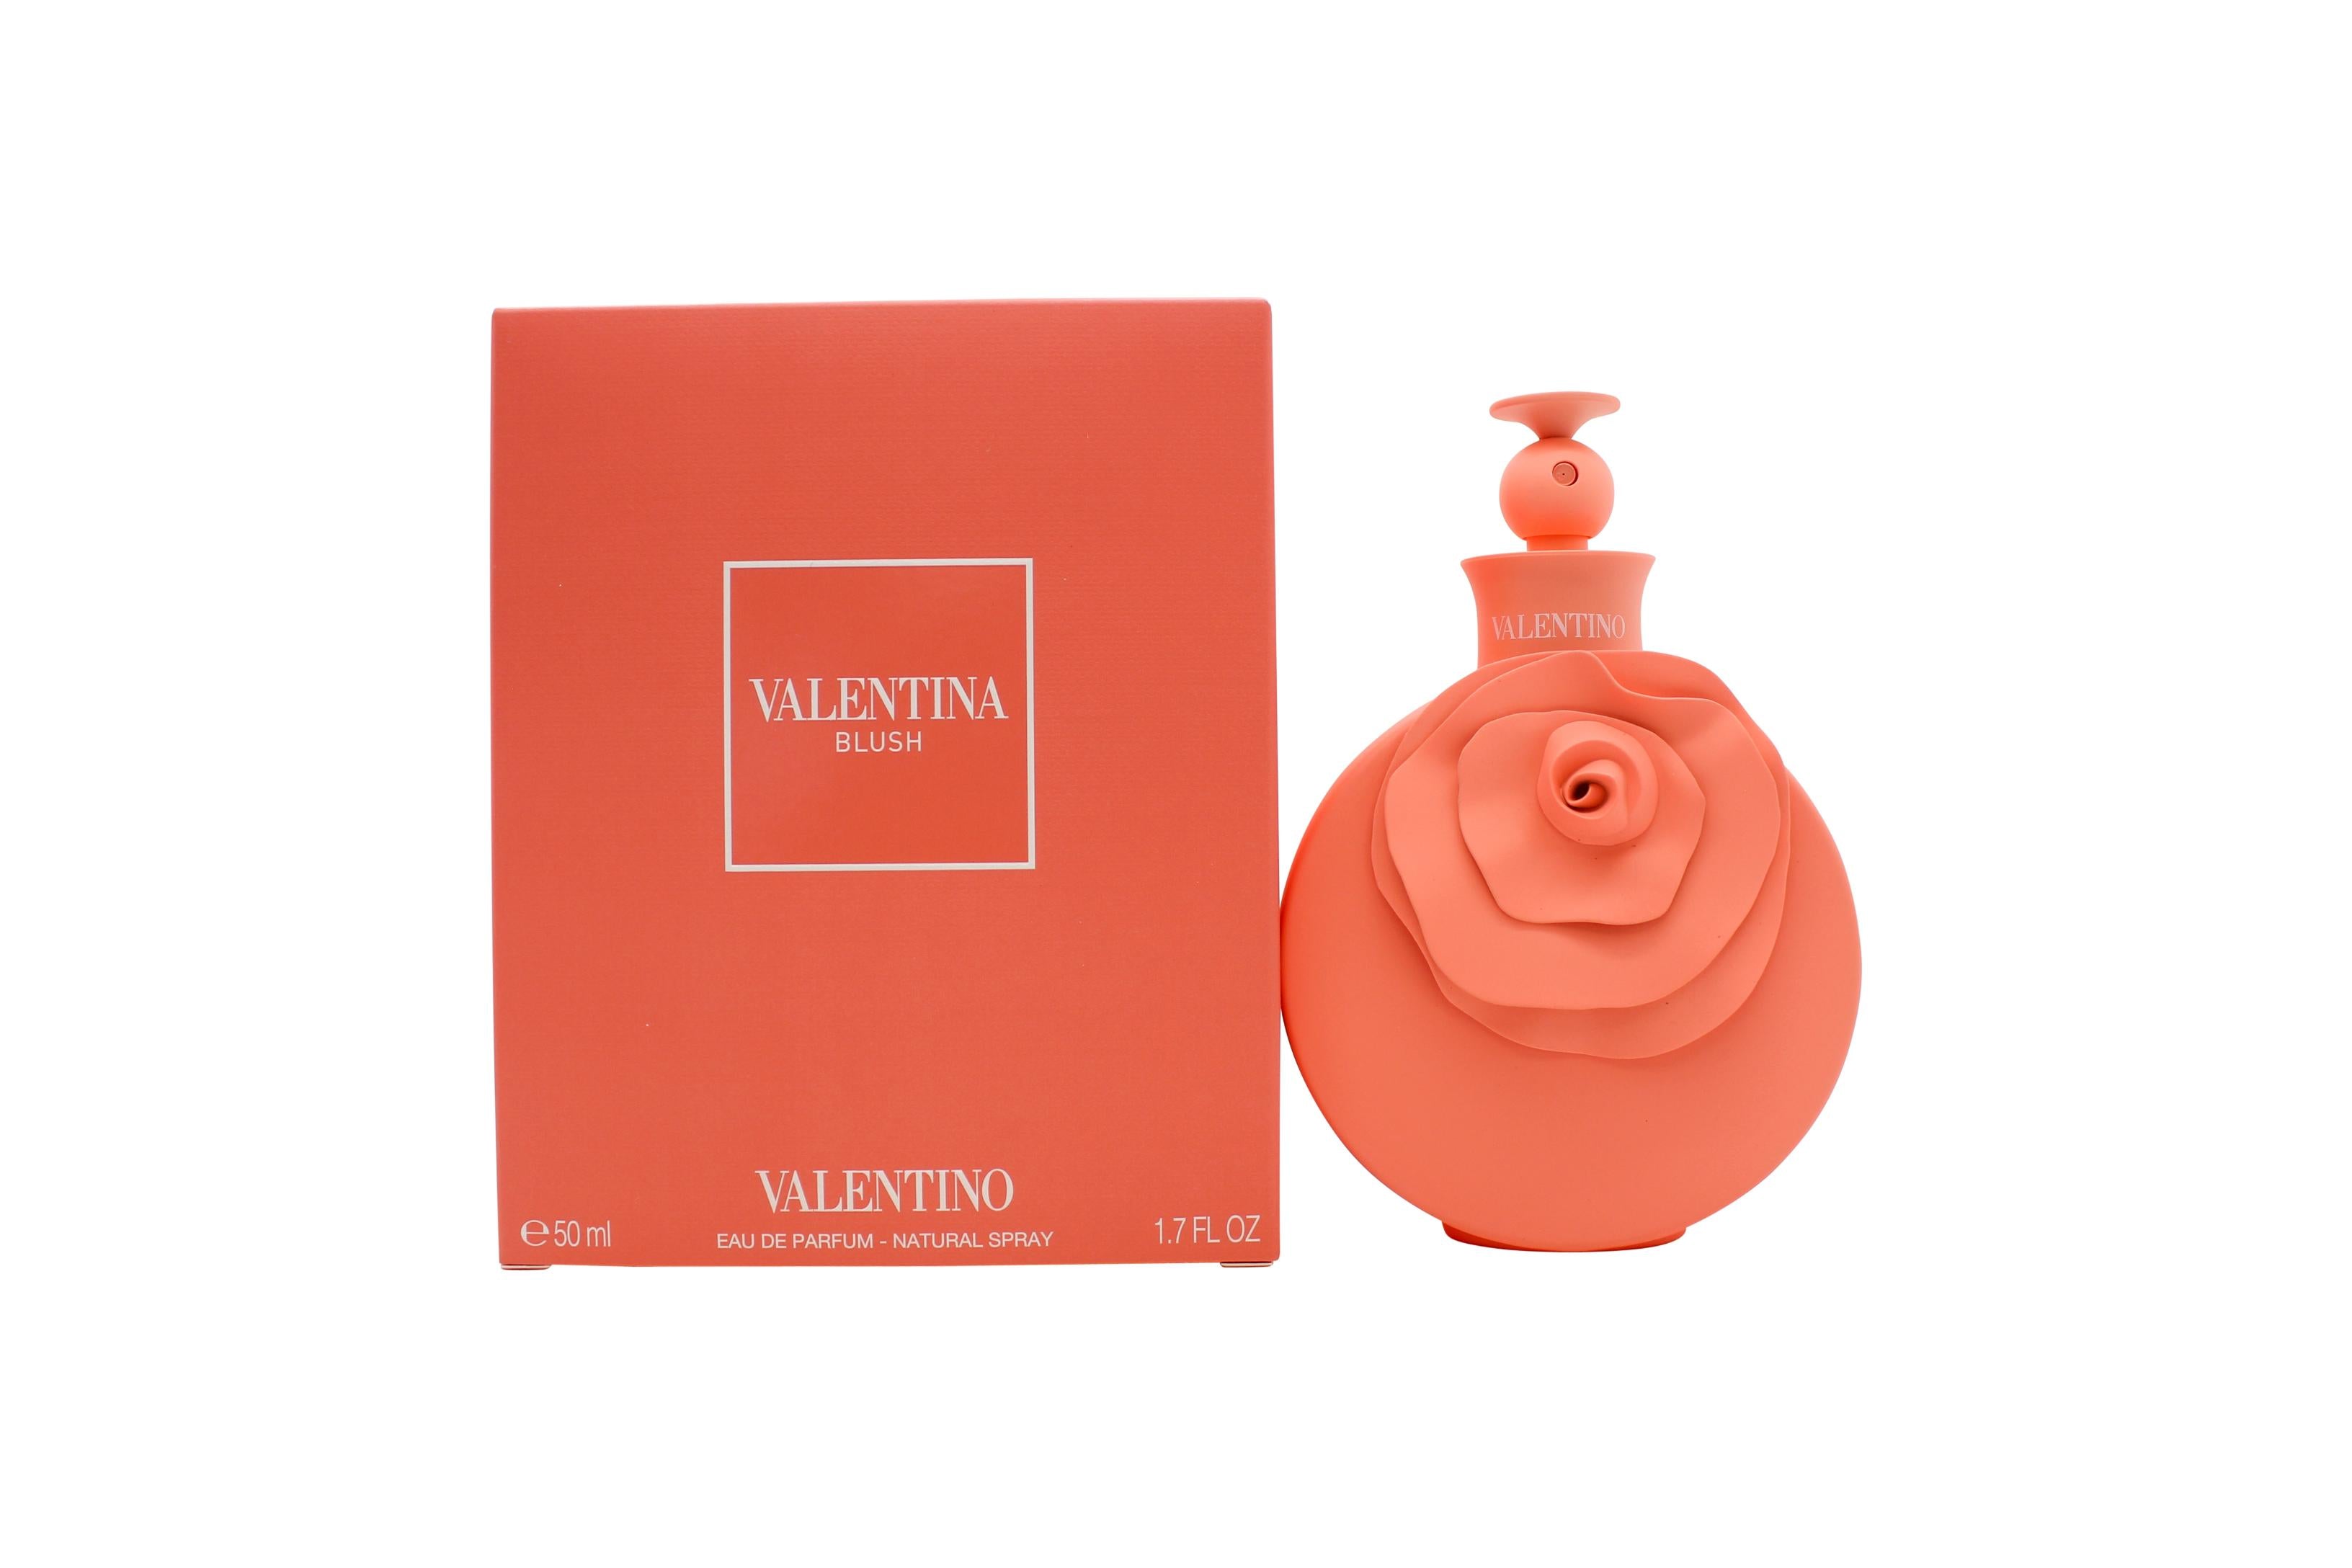 View Valentino Valentina Blush Eau de Parfum 50ml Spray information